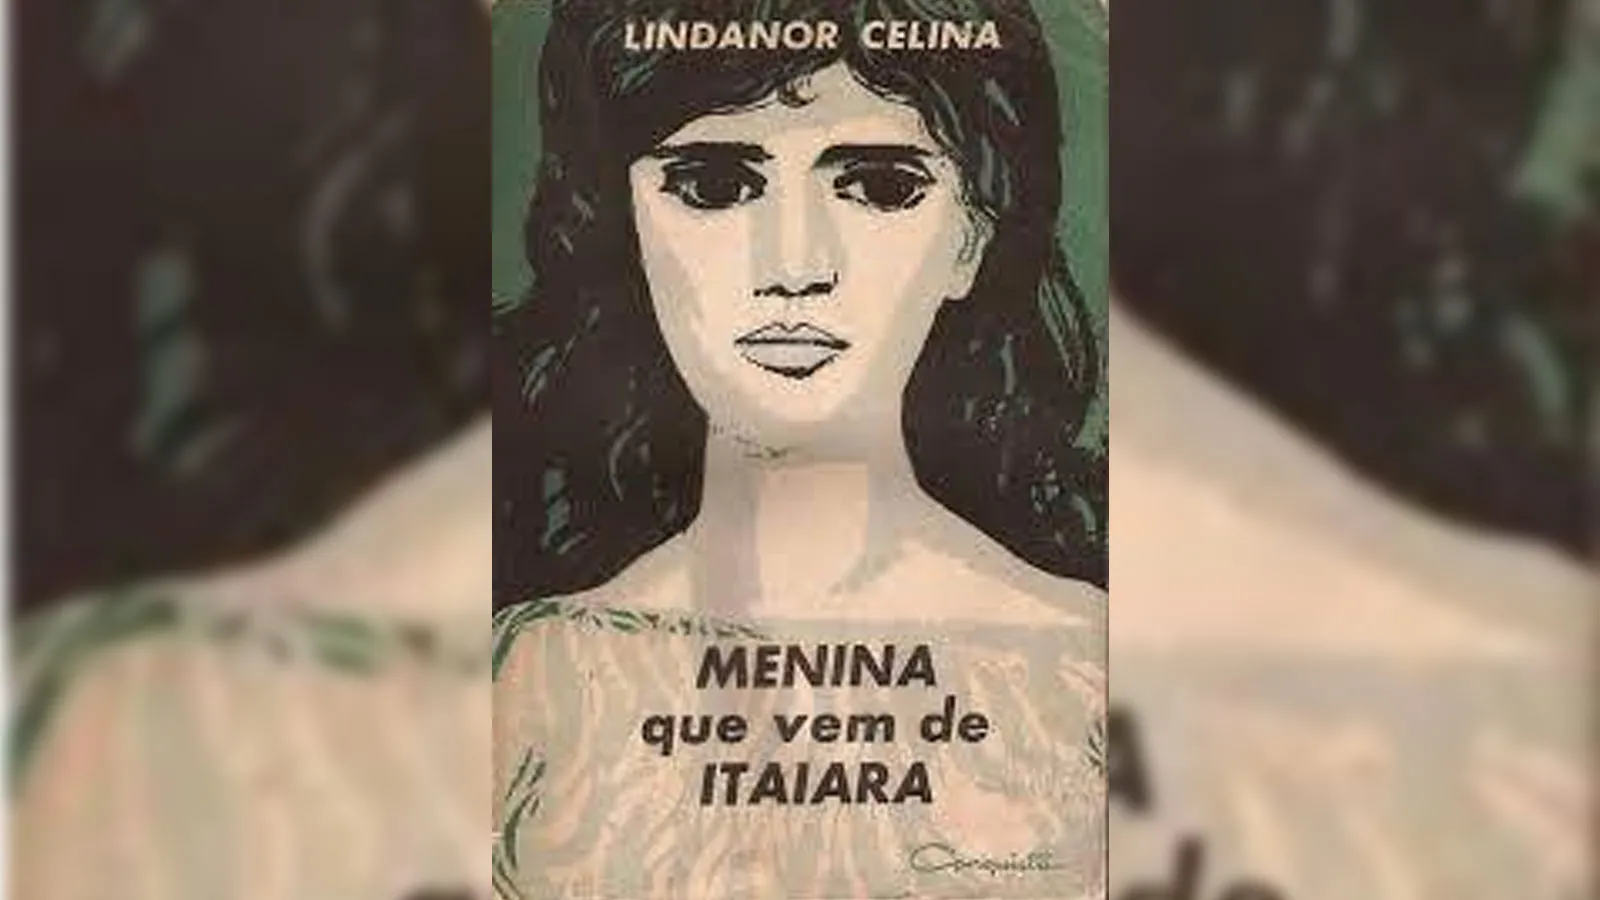 A menina que vem de Itaiara: 60 anos da importante obra de Lindanor Celina